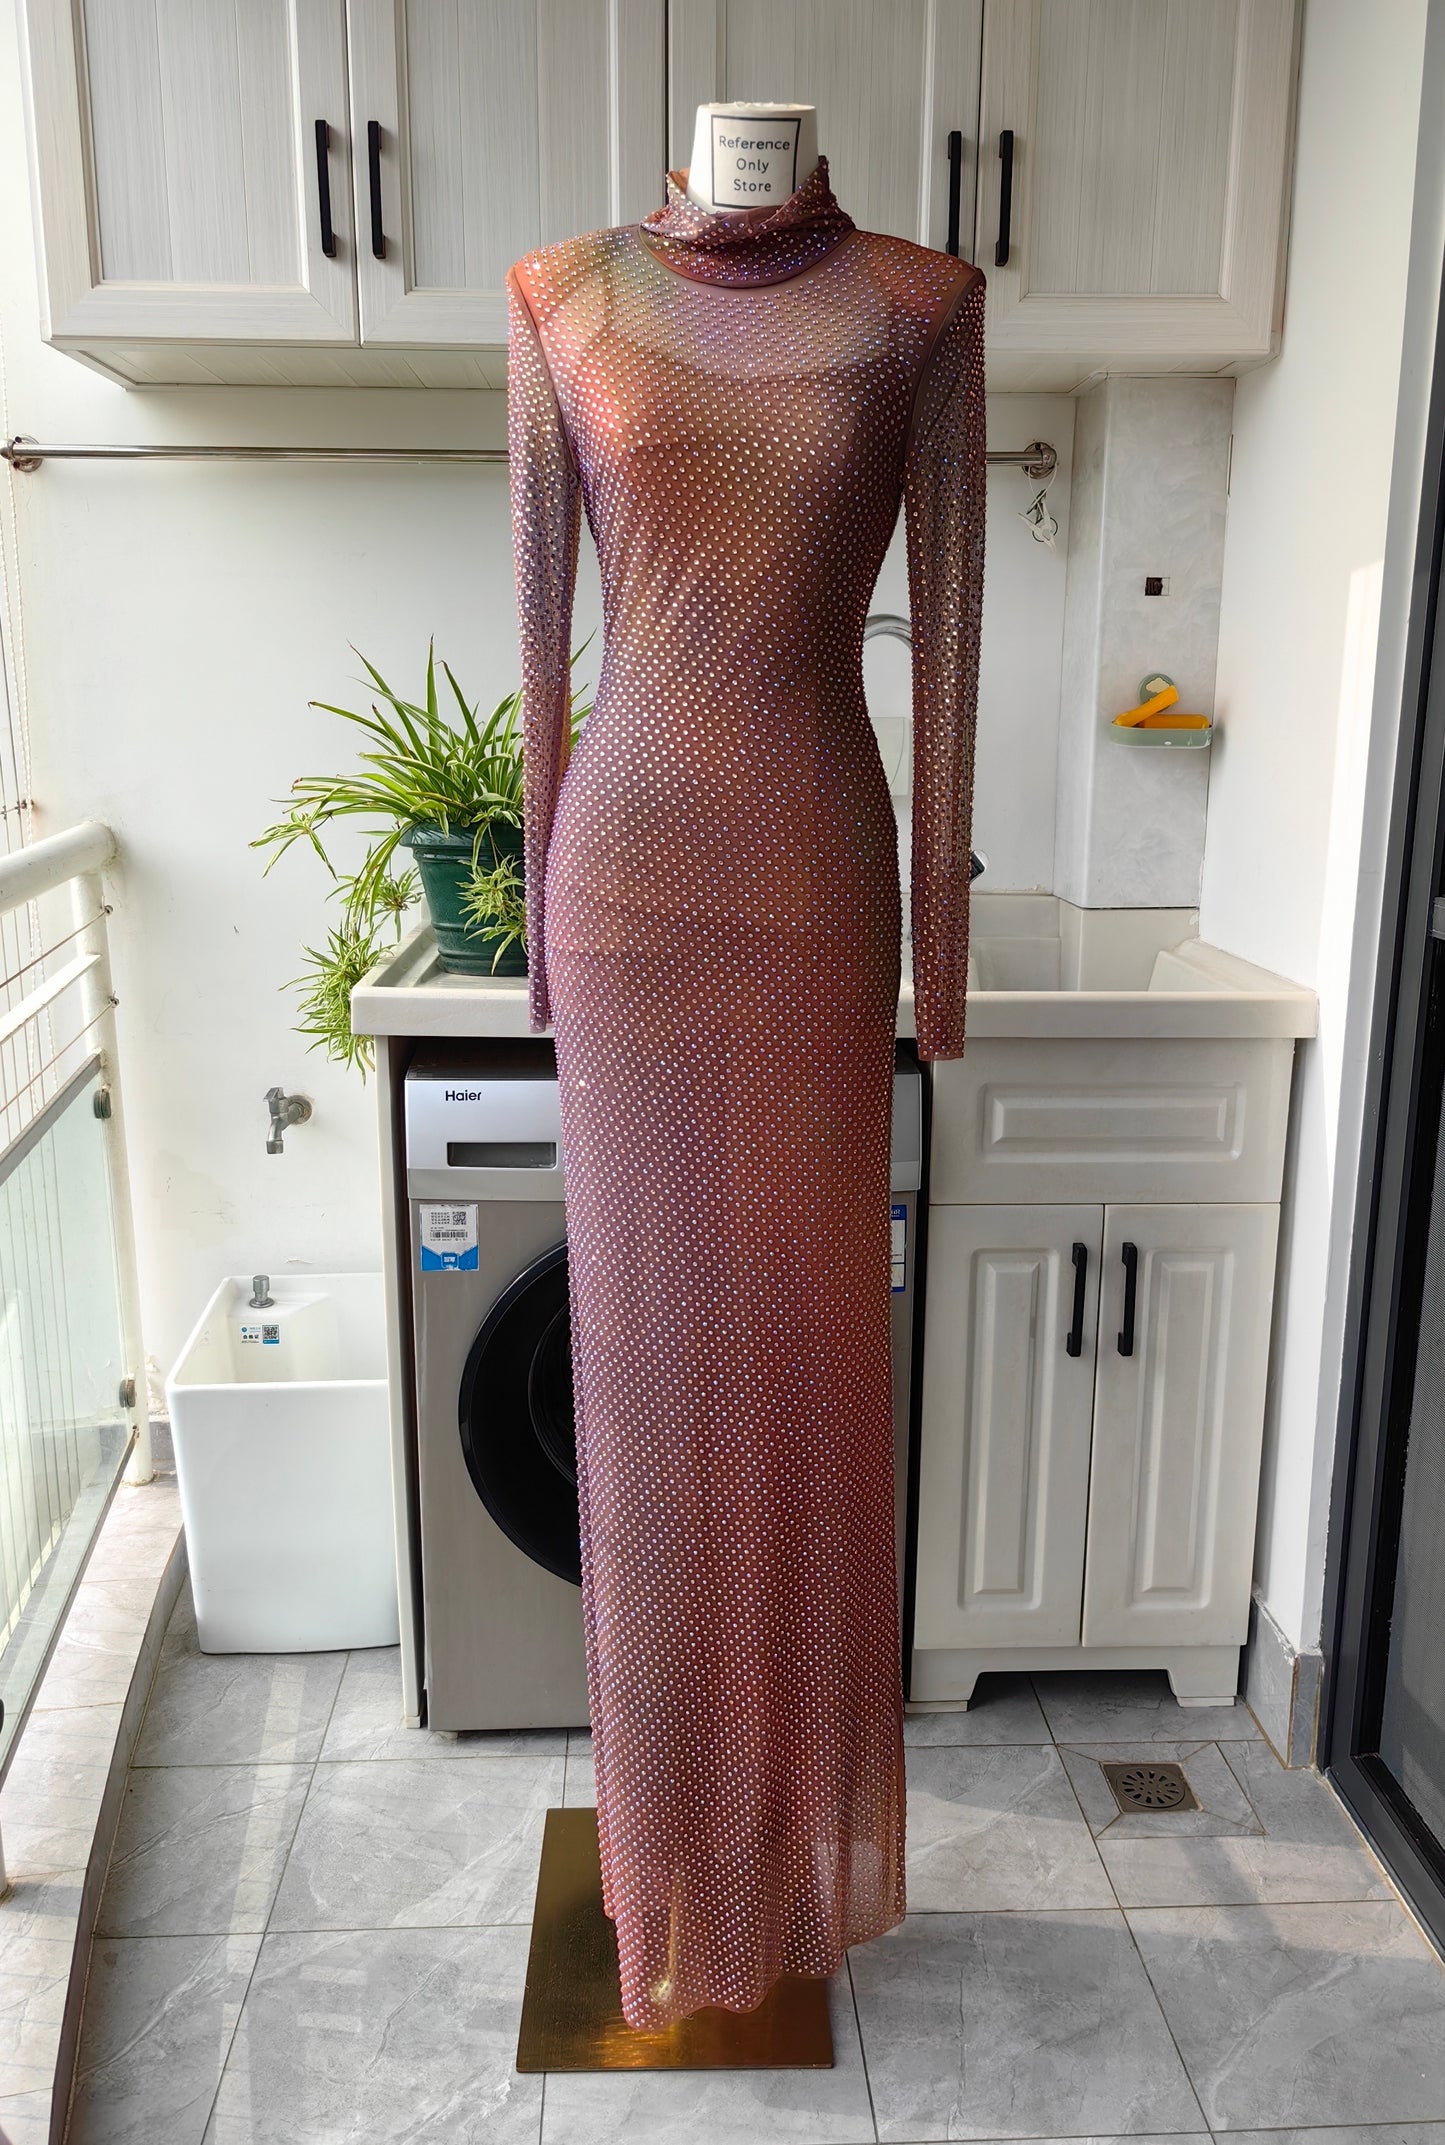 SP Iridescent Printed Rhinestone Maxi Dress